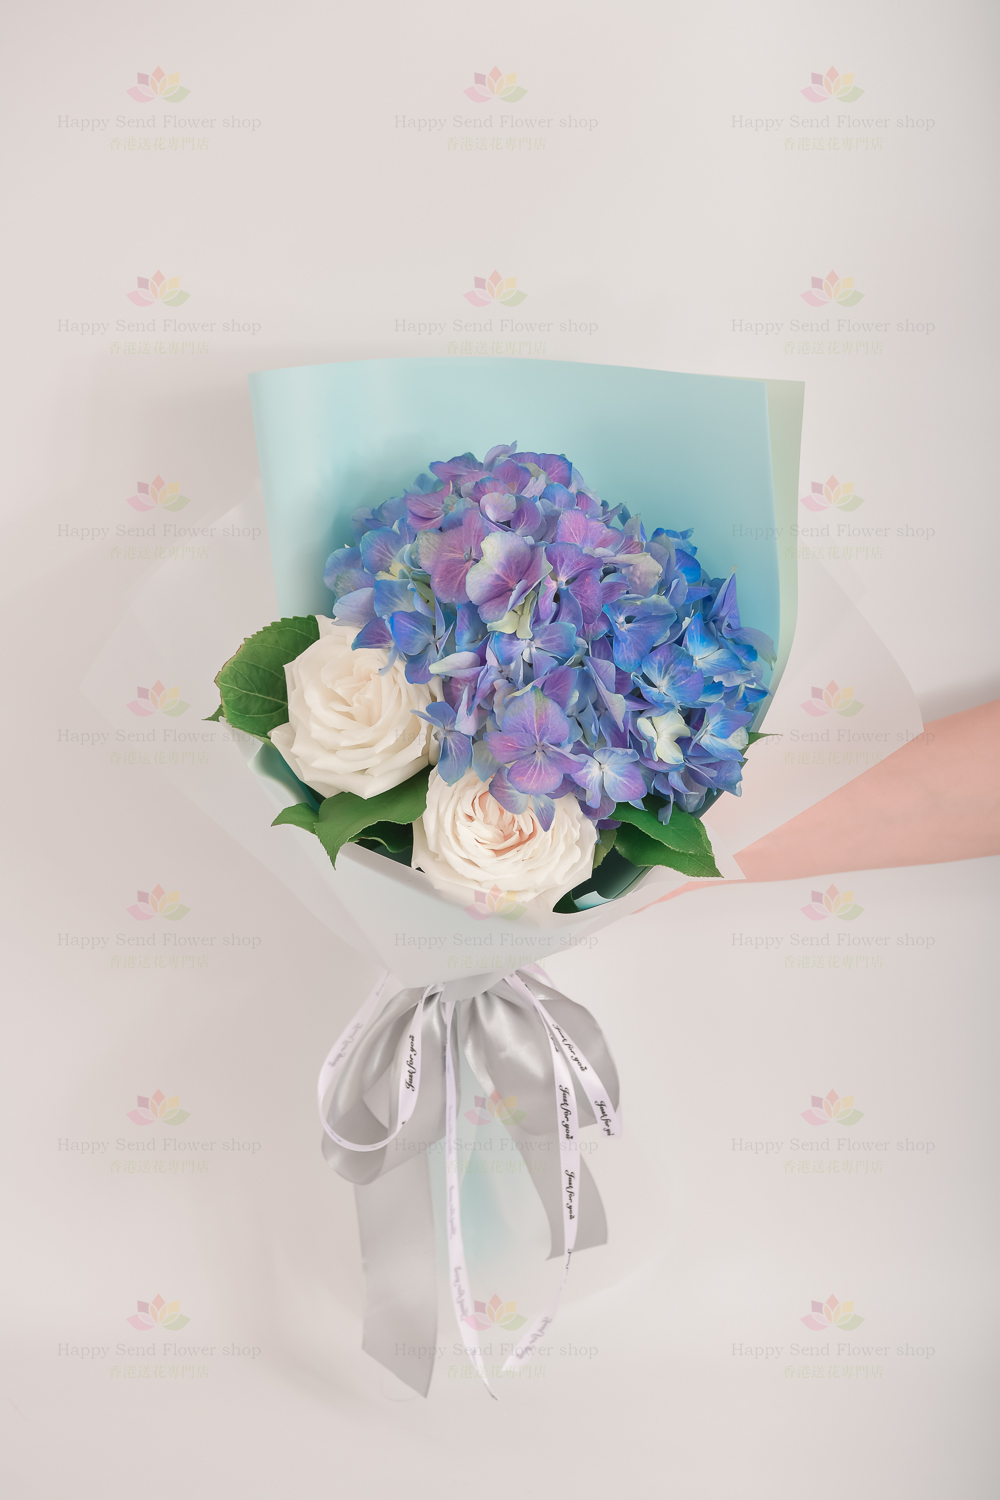 Beautiful (blue hydrangeas, white roses)